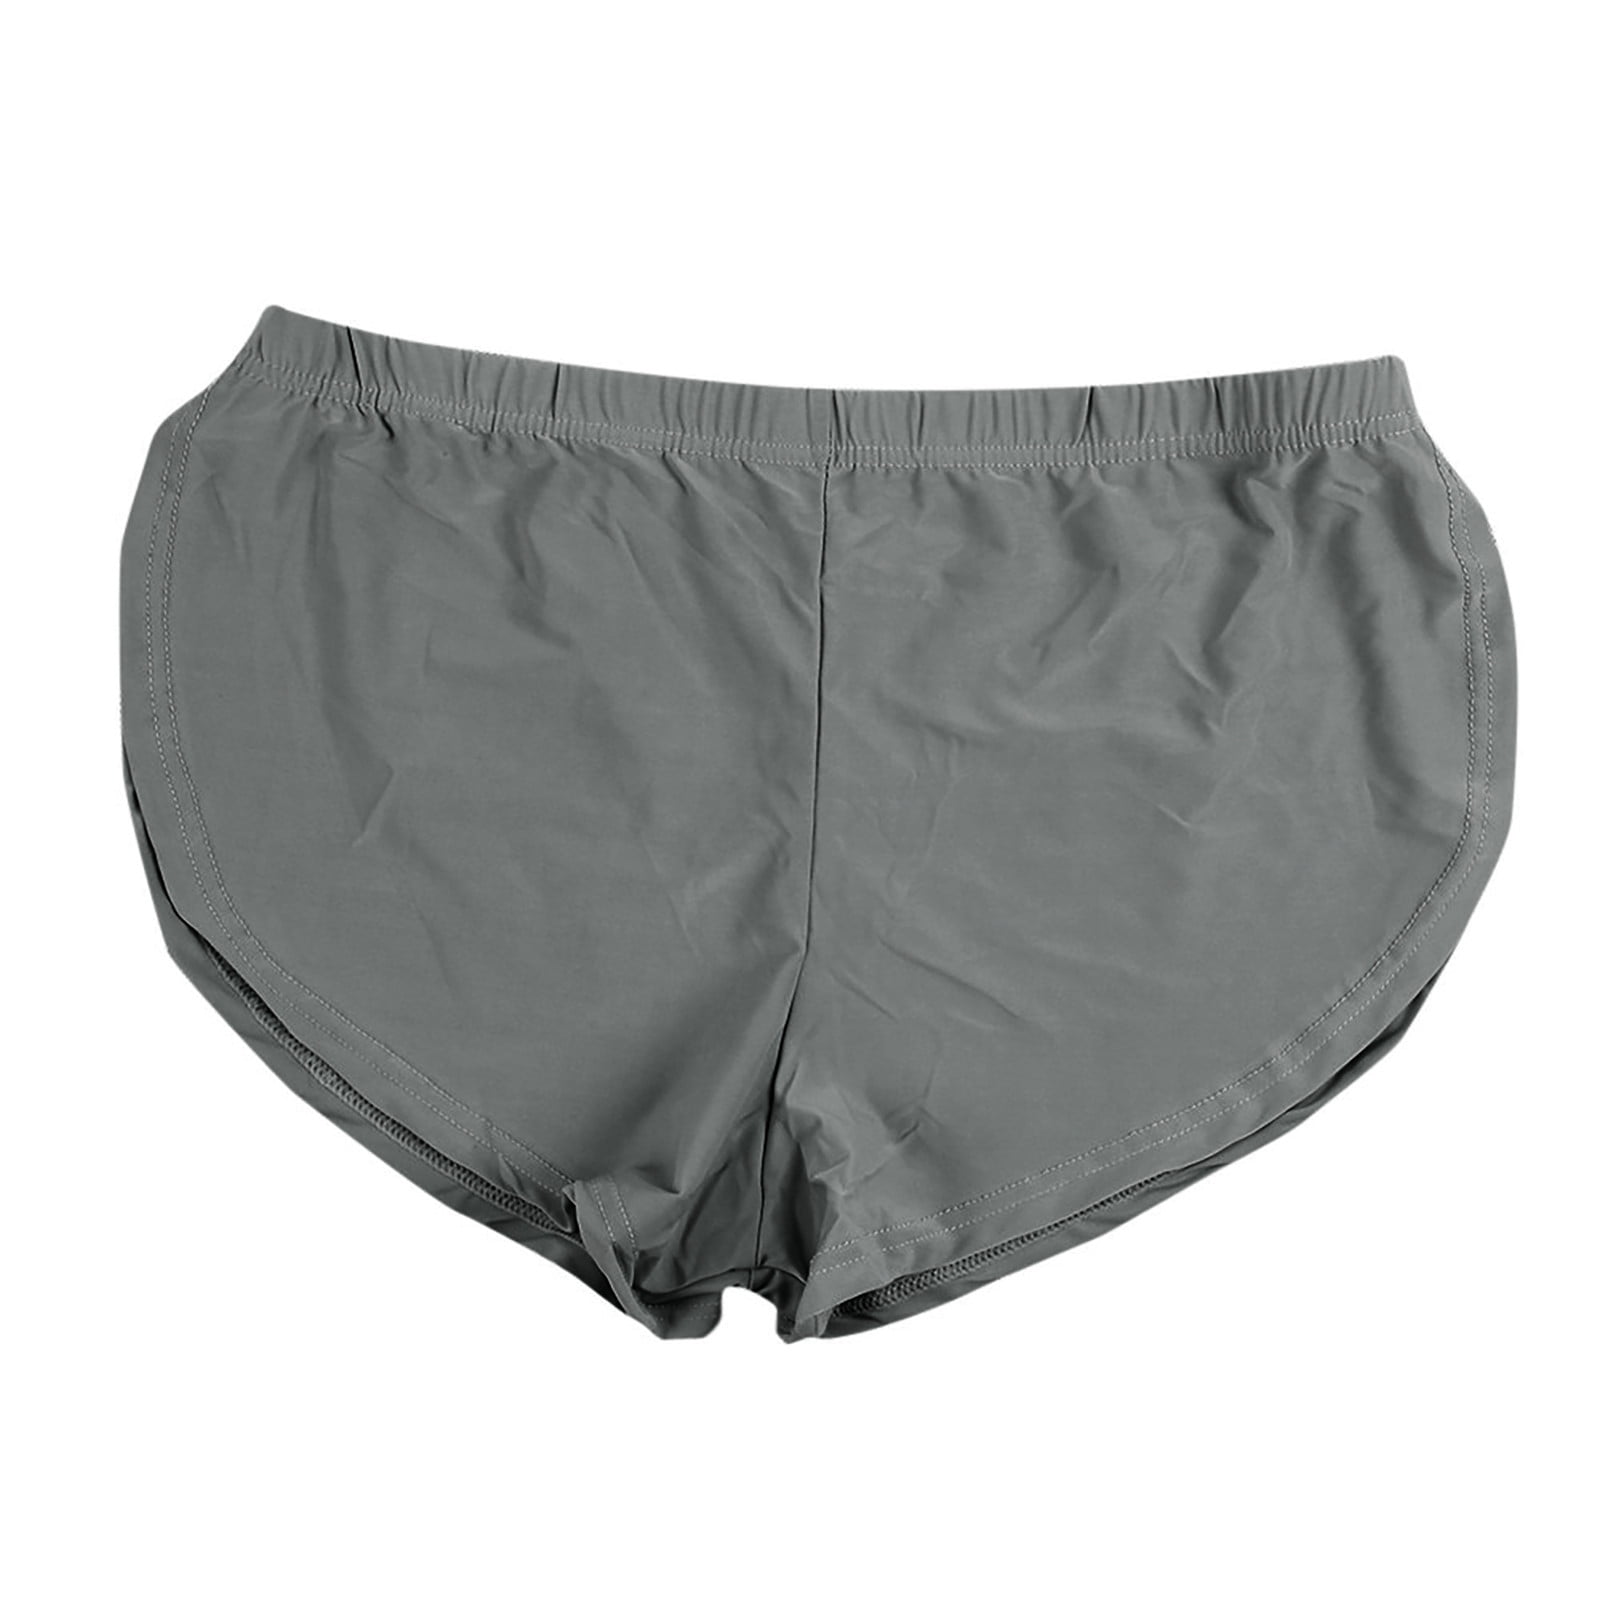 INSPI Basics 3pcs Set Boxer Brief for Men Boxers Shorts Random colors, Black, Grey